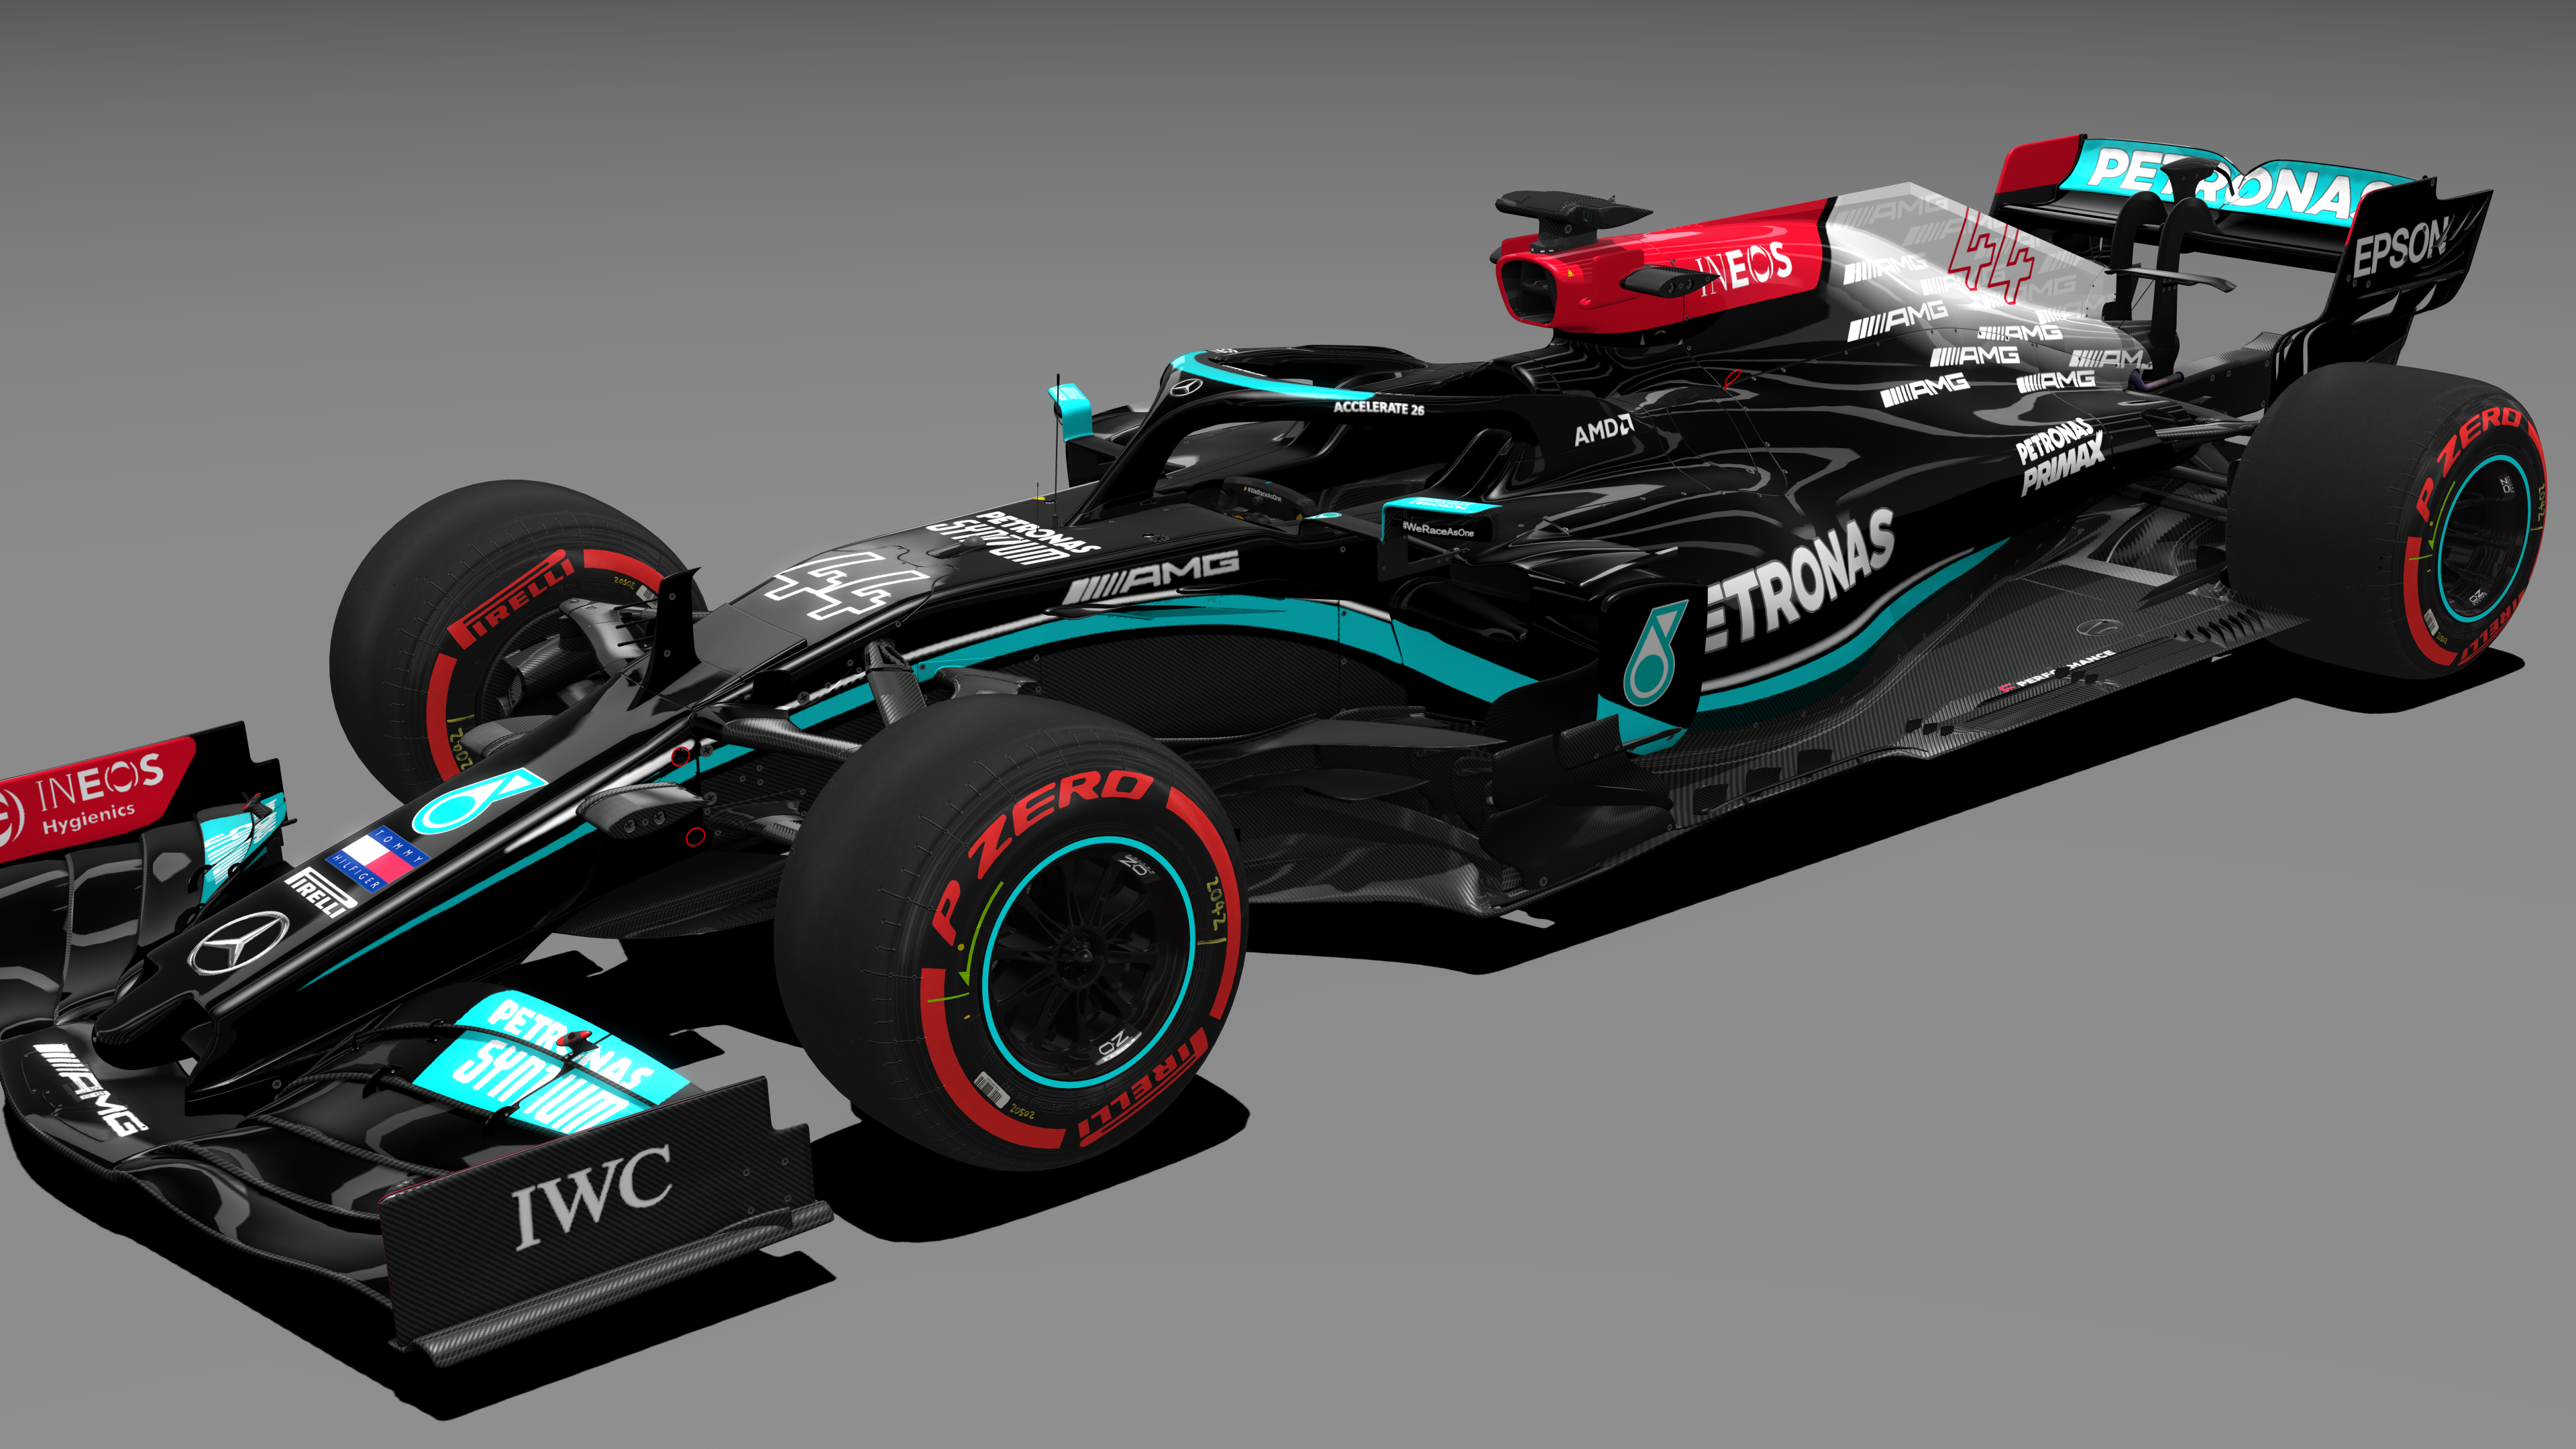 Mercedes-AMG Petronas [44 Lewis Hamilton]